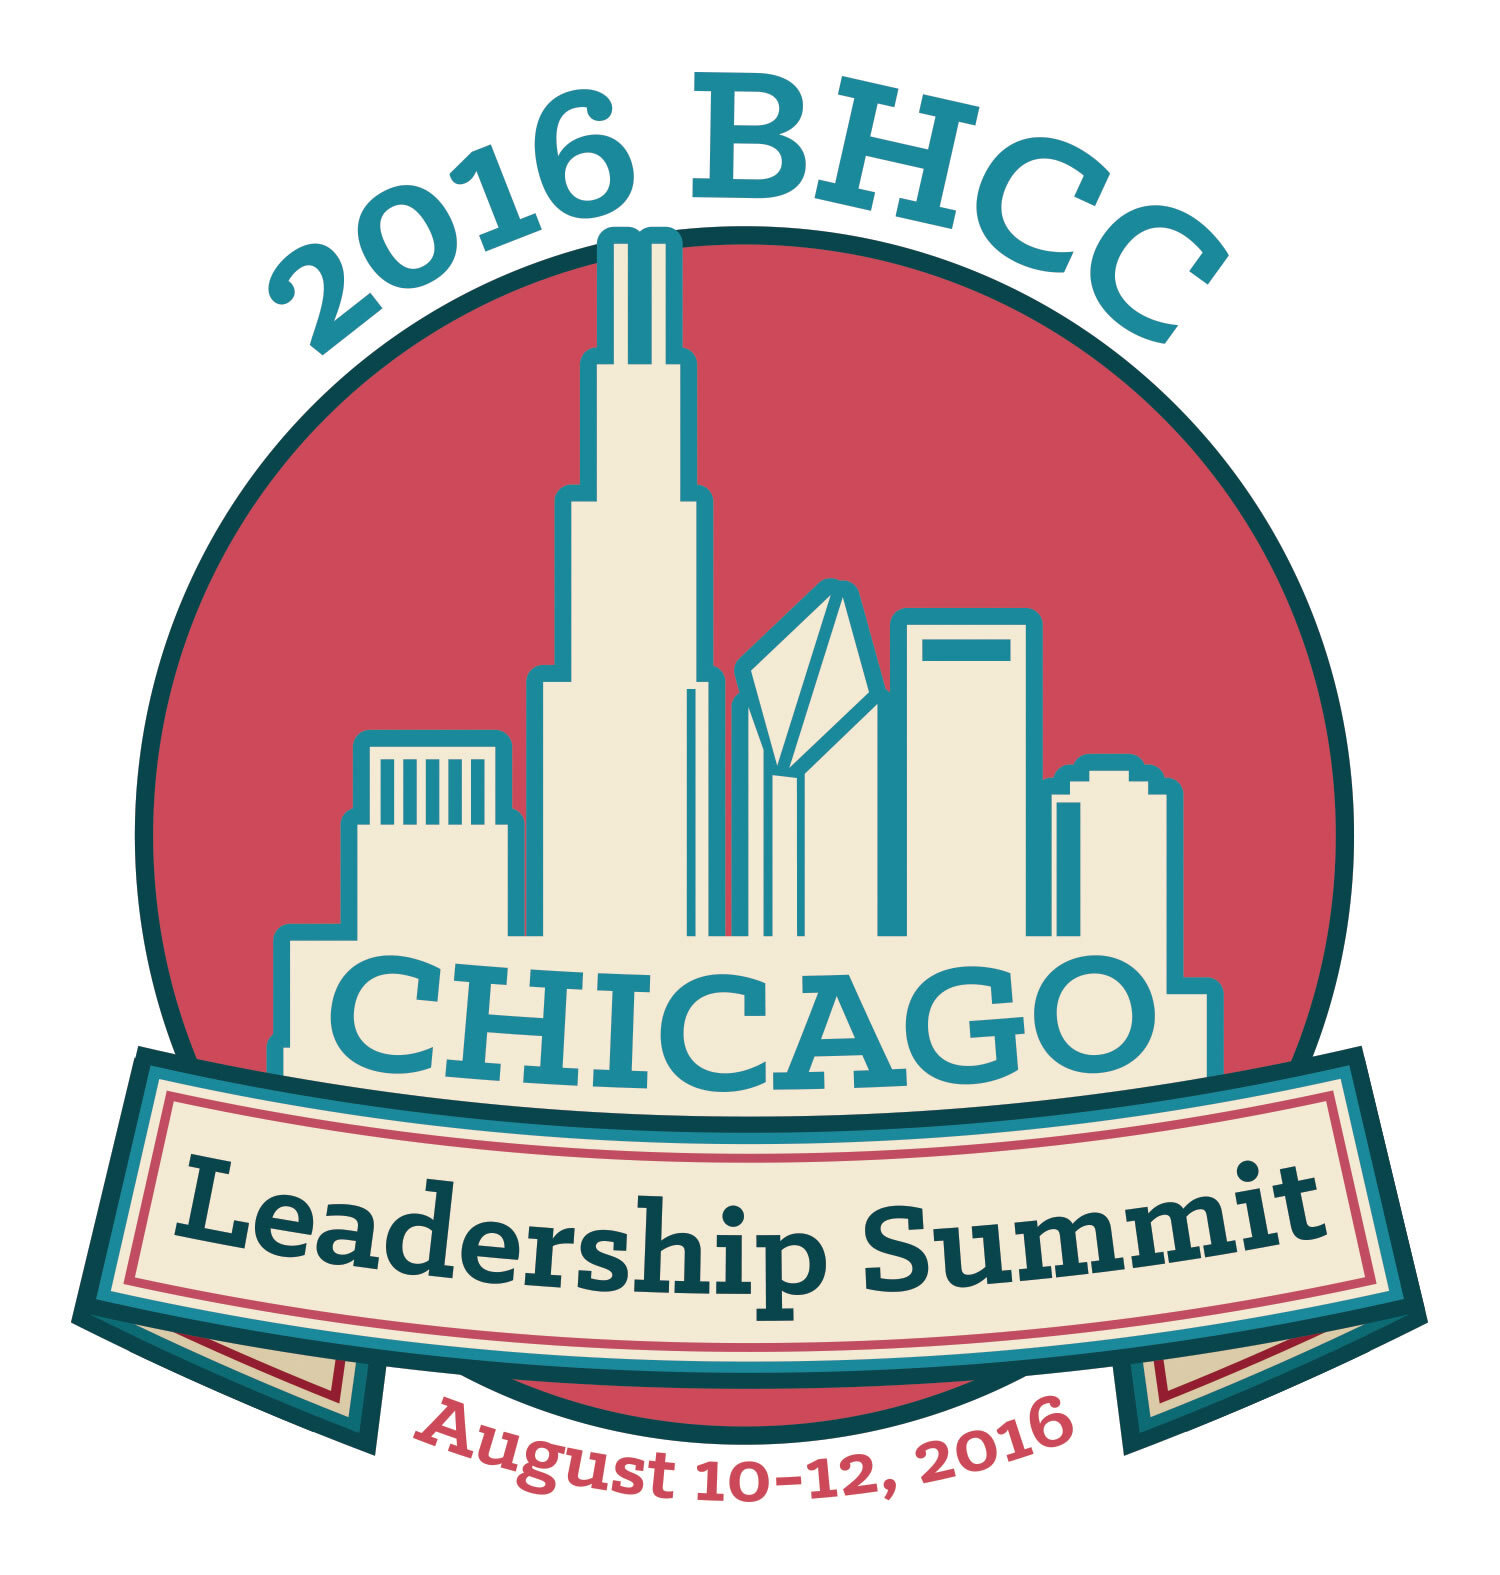 BHCC-ChicagoEventLogo.jpg